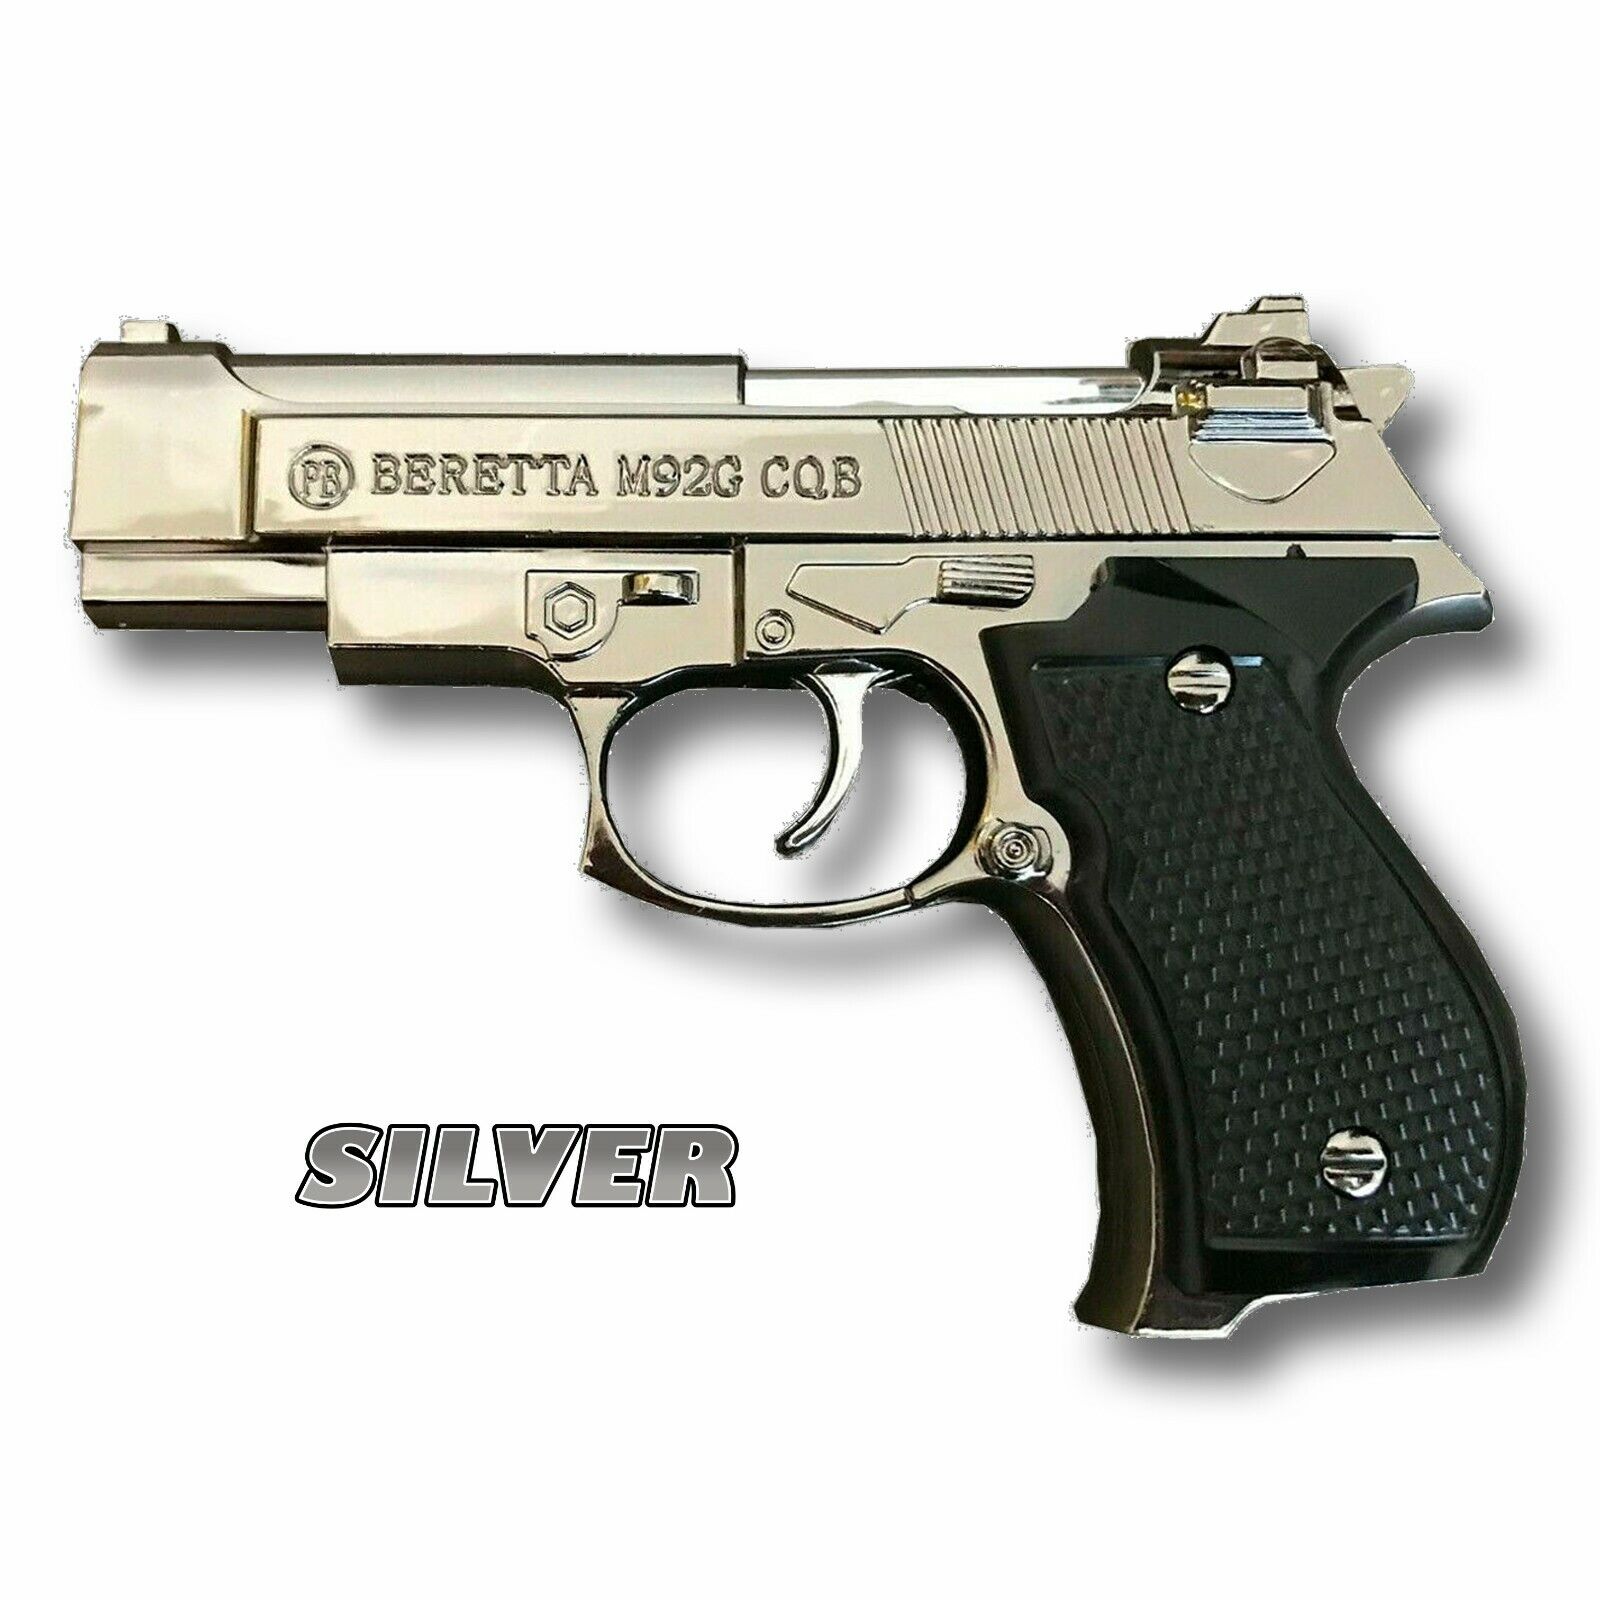 *1/2 Scale* Beretta M92G Jet Torch Flame Pistol Gun Lighter - Trigger Activated